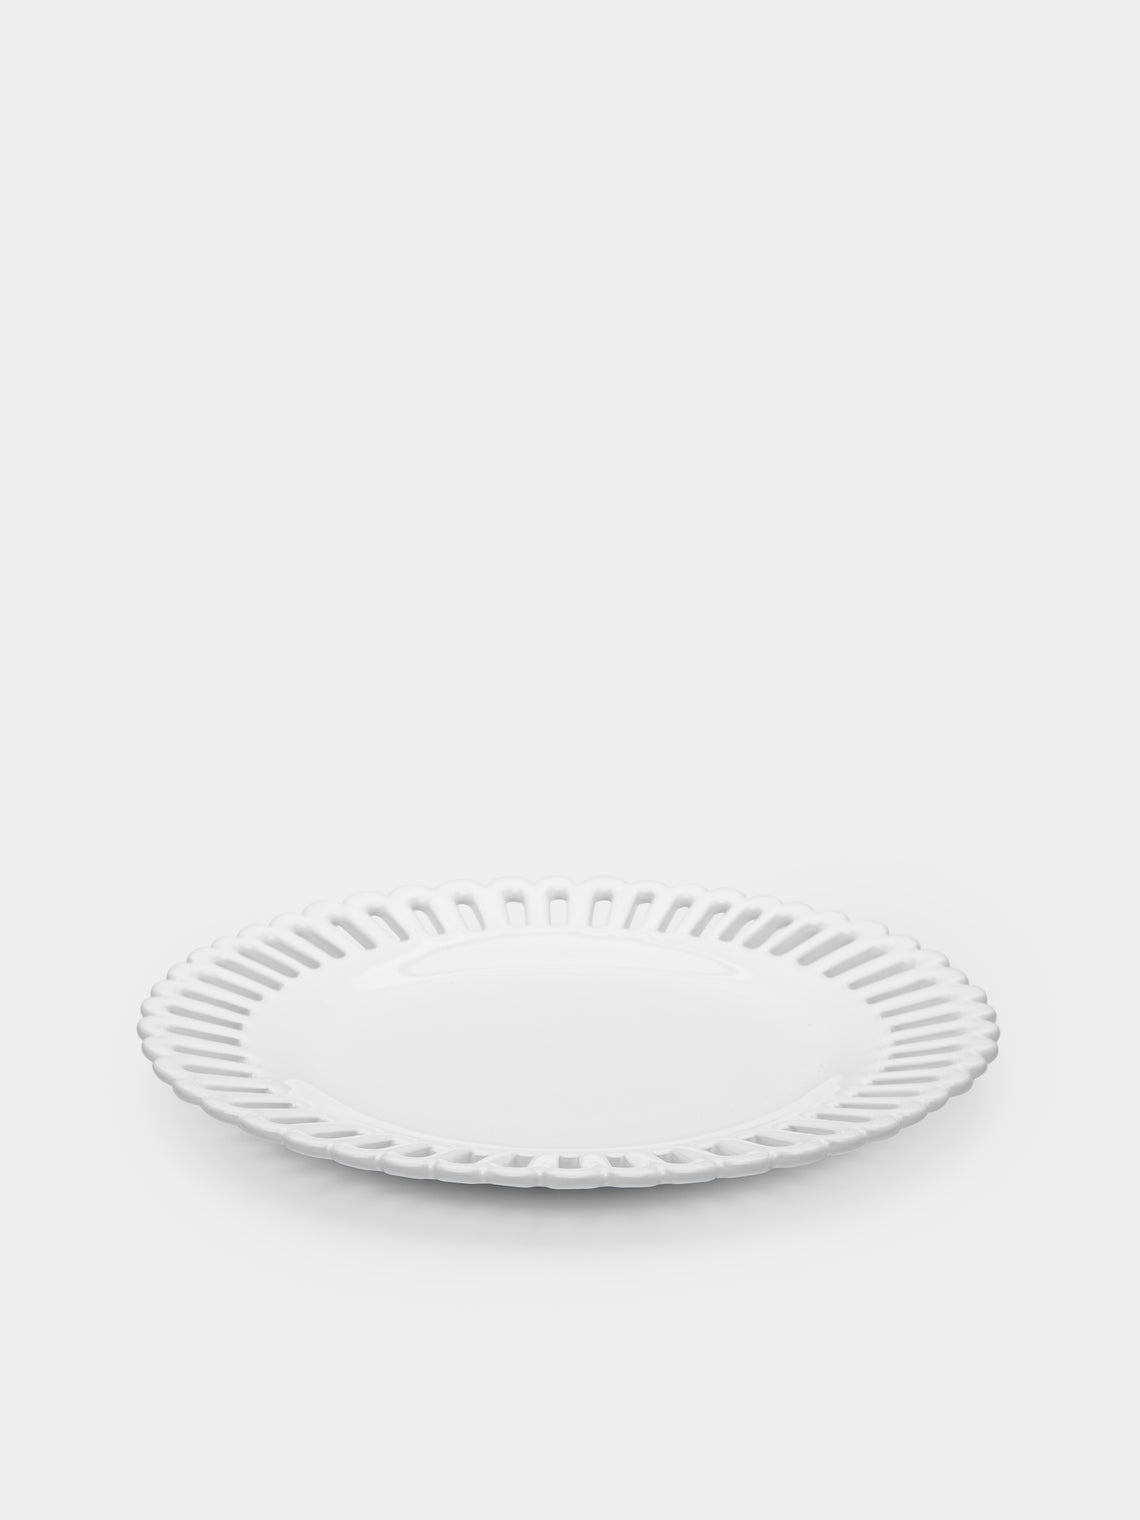 Bourg Joly Malicorne - Bourg-Joly Openwork Ceramic Dessert Plate -  - ABASK